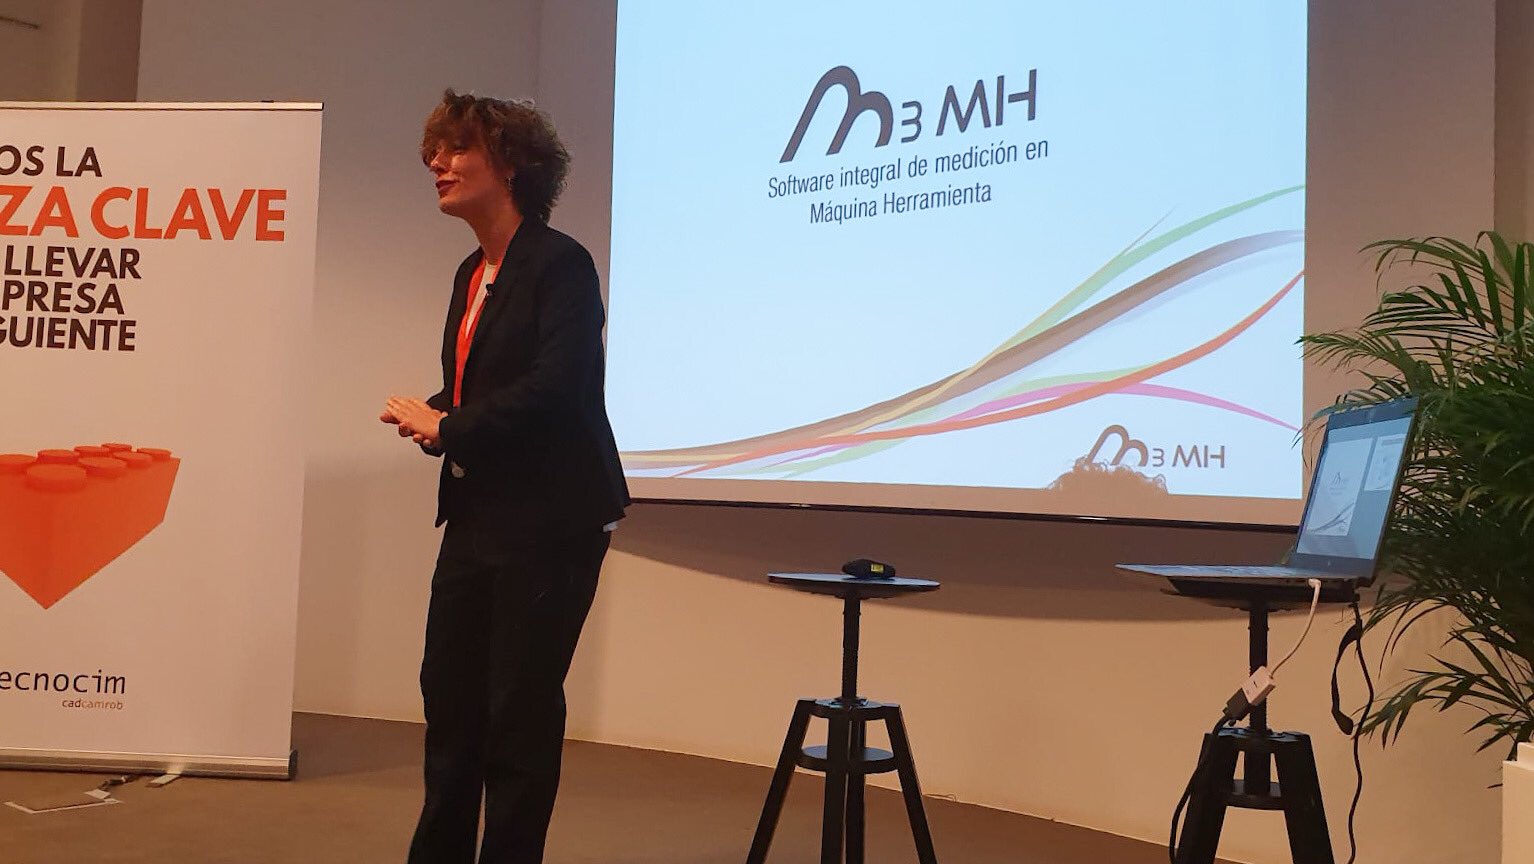 Innovalia Metrology presenta M3MH en 4 ciudades distintas gracias a las jornadas de Tecnocim